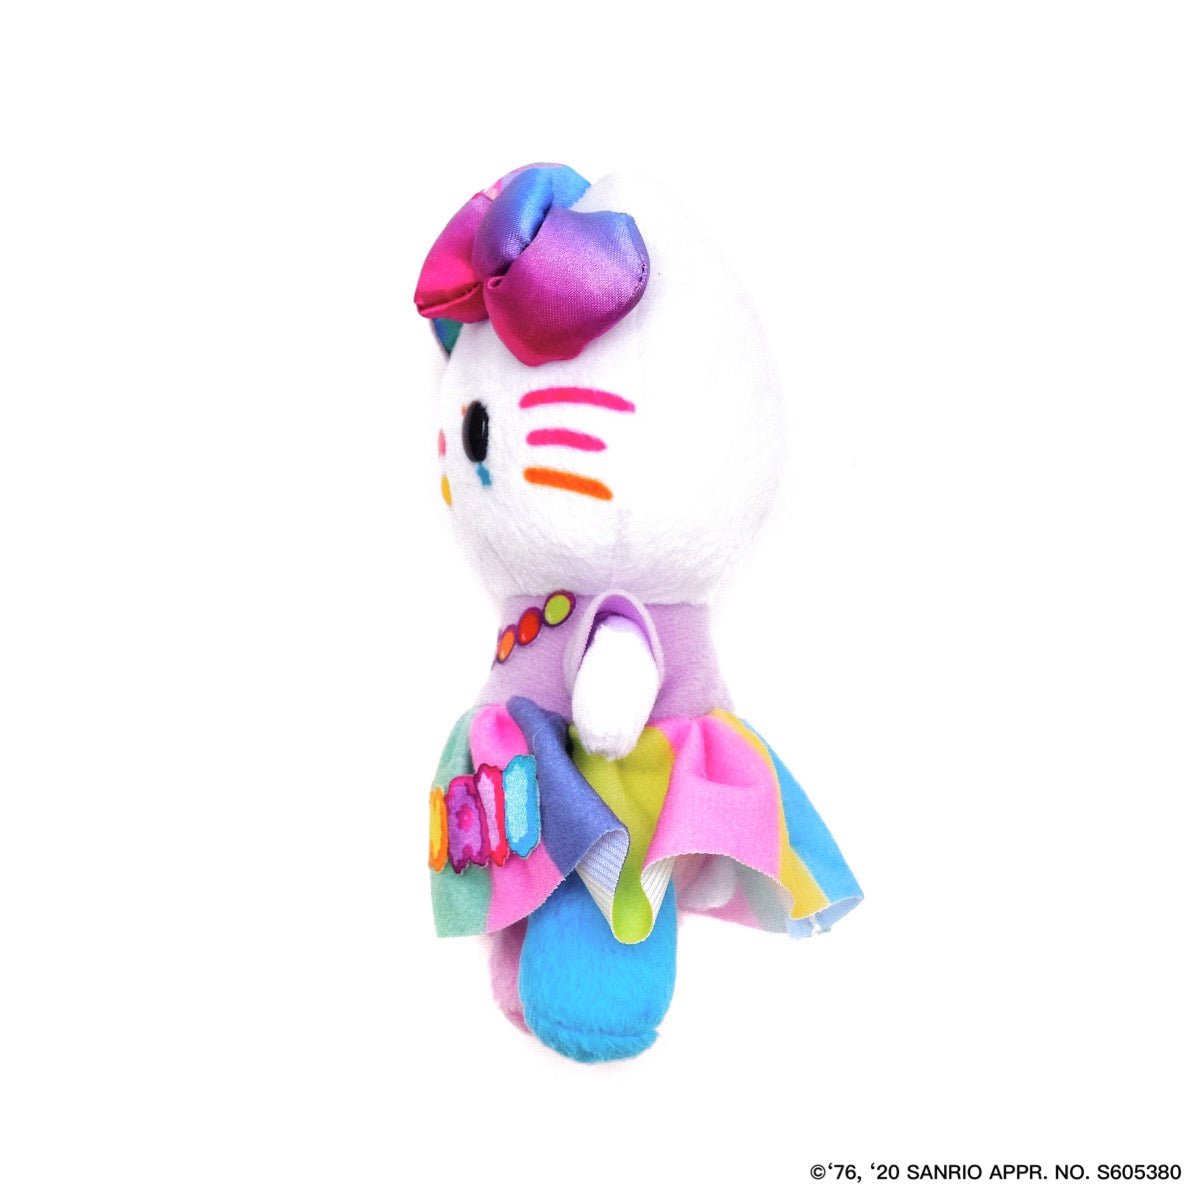 Kawaii Monster Cafe & Hello Kitty mascot keychain